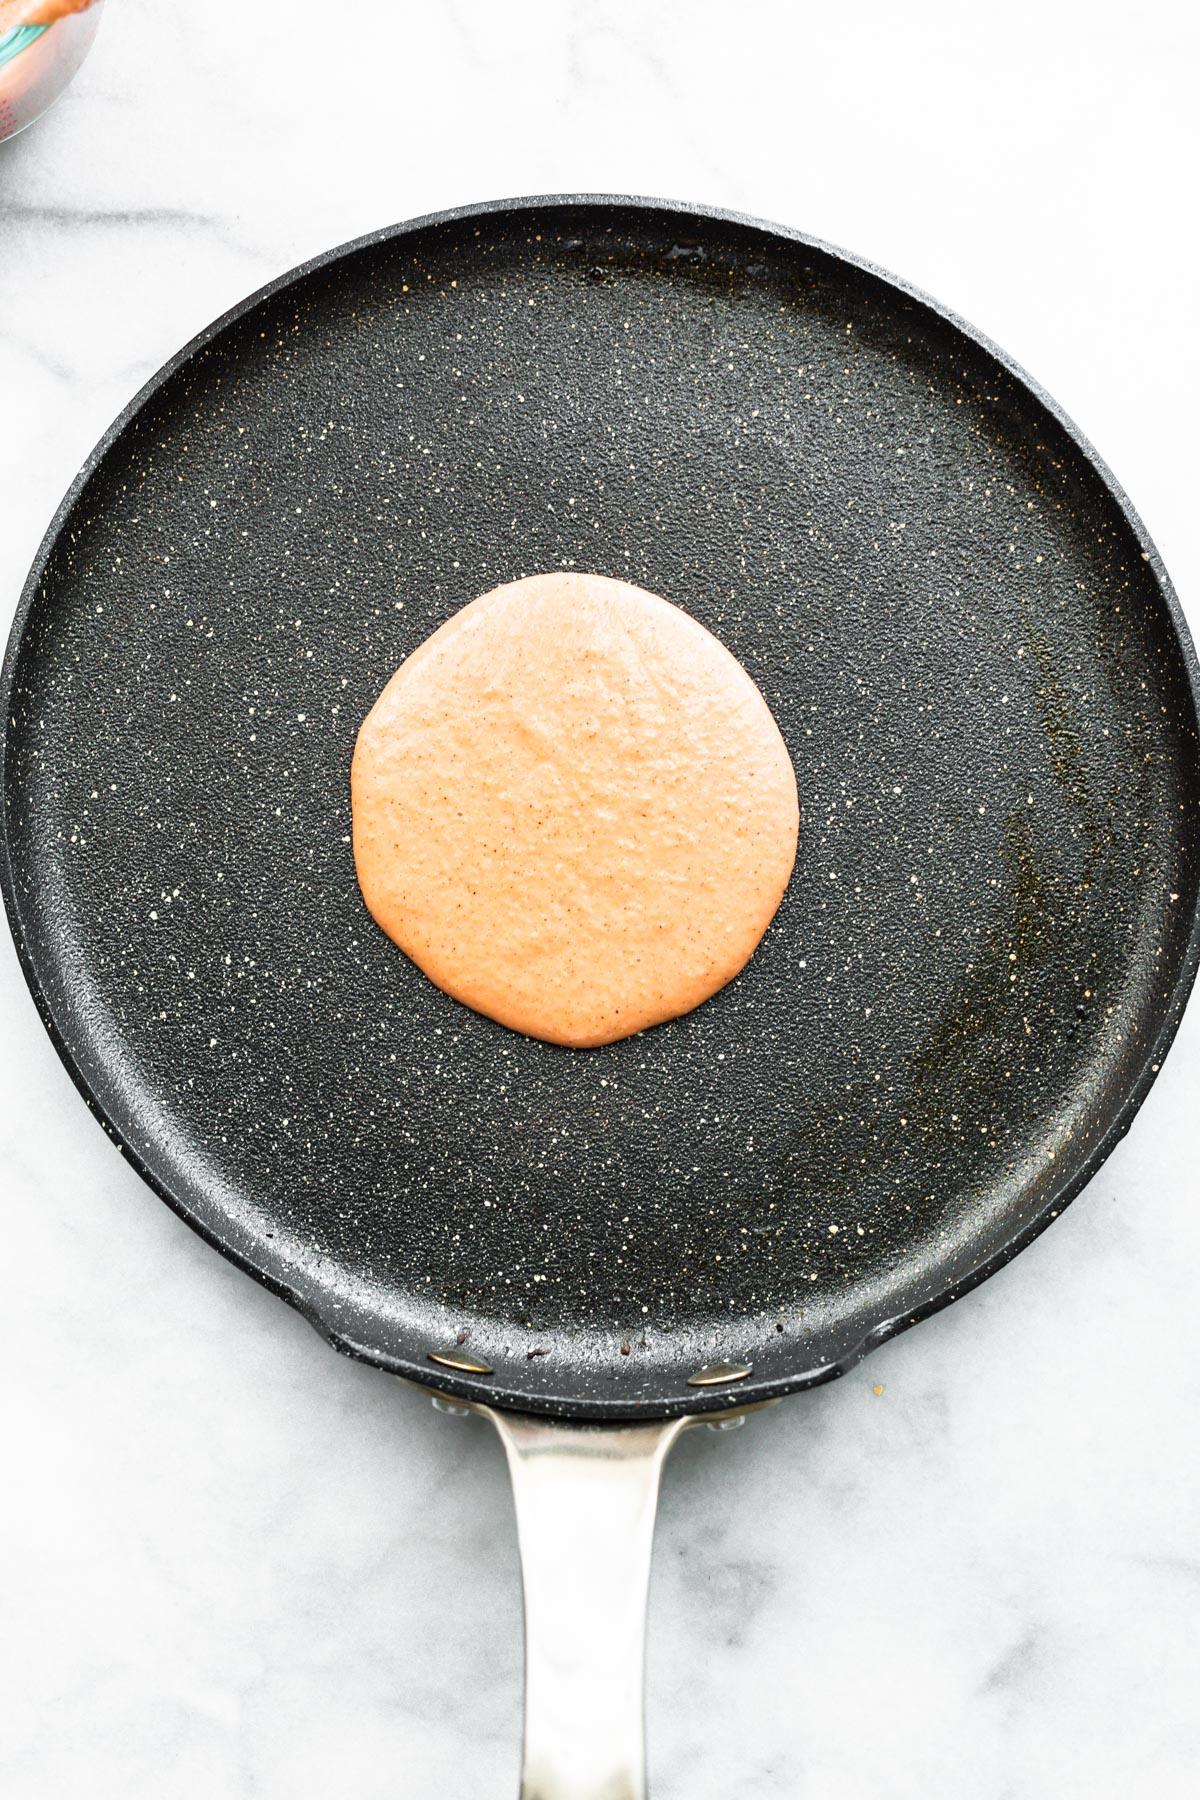 a circle of gluten-free carrot cake pancake batter cooking on a skillet